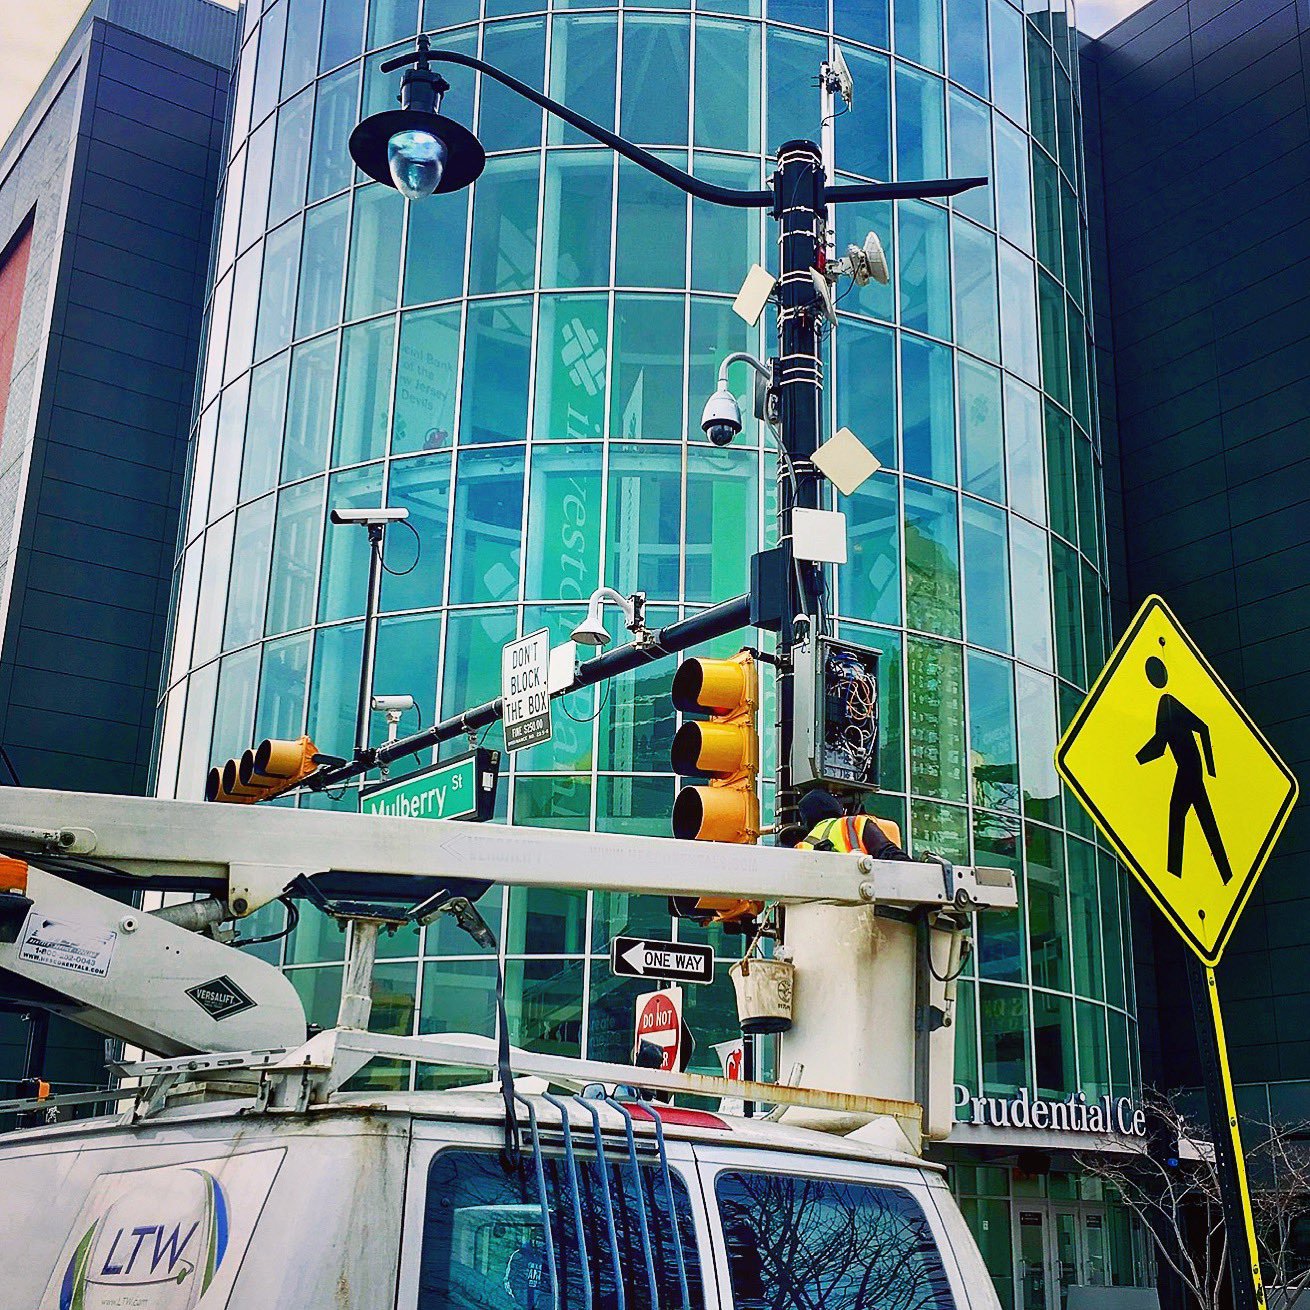 LTW techs installing traffic cameras